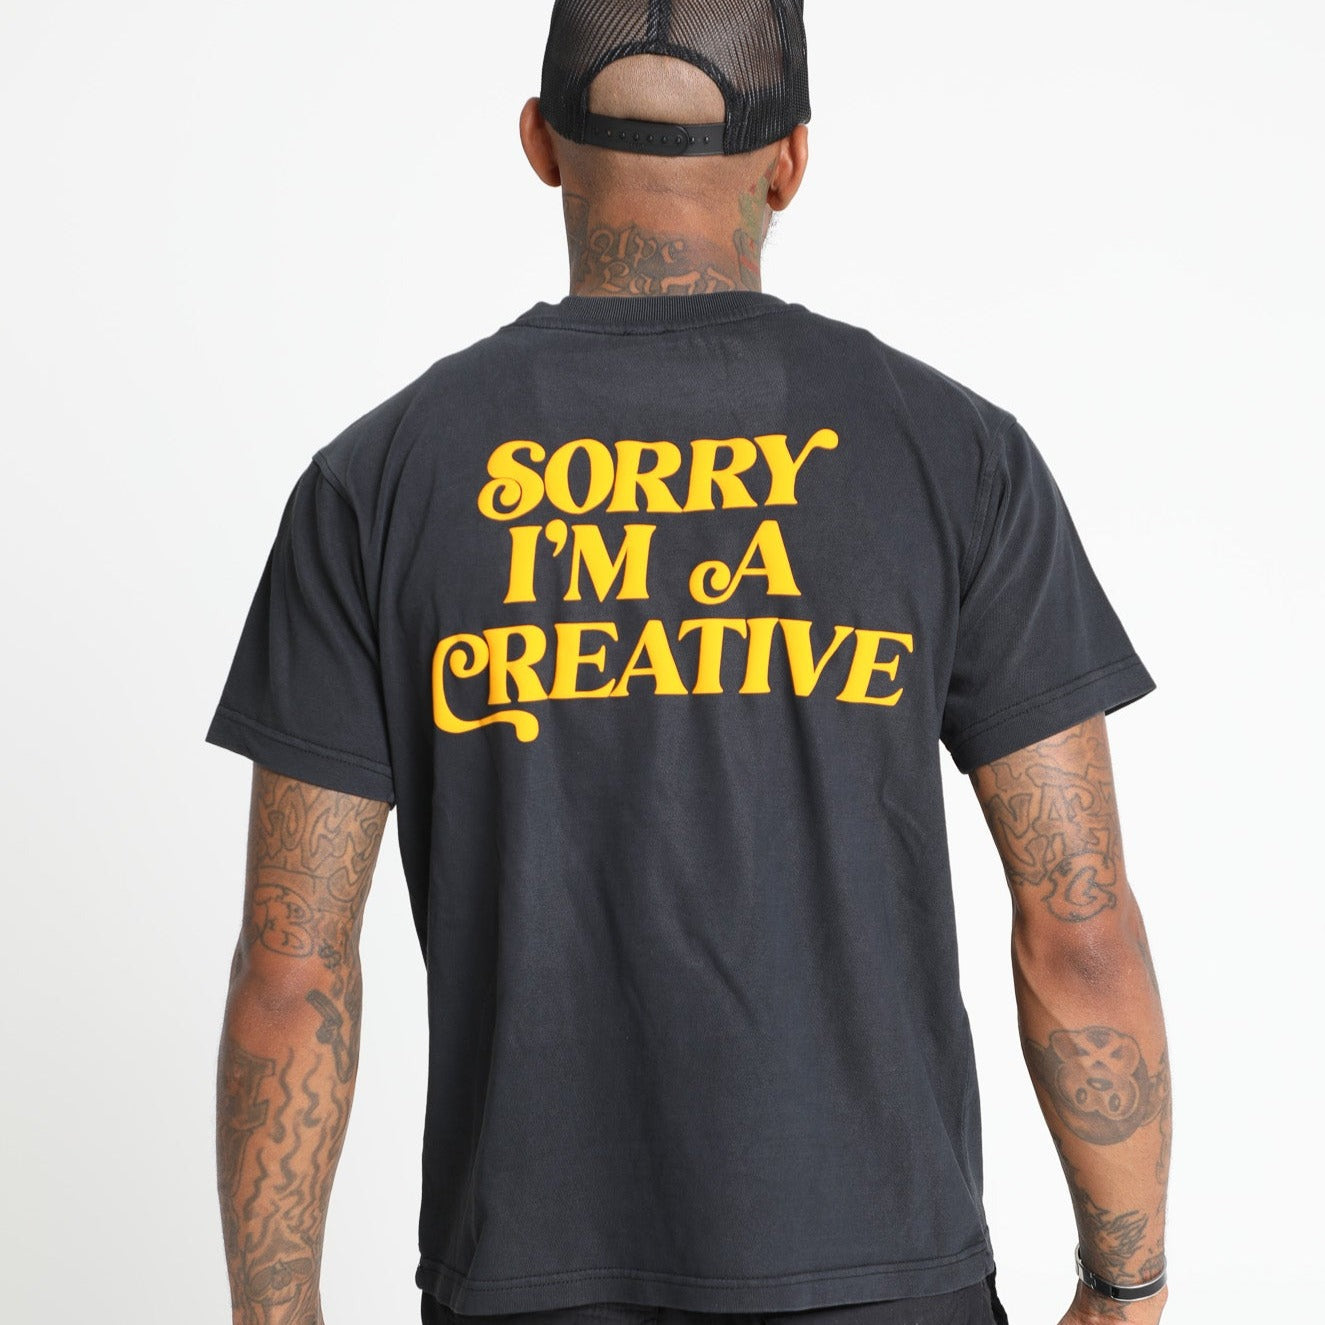 Sorry I'm A Creative - T-Shirt (Black + Yellow)